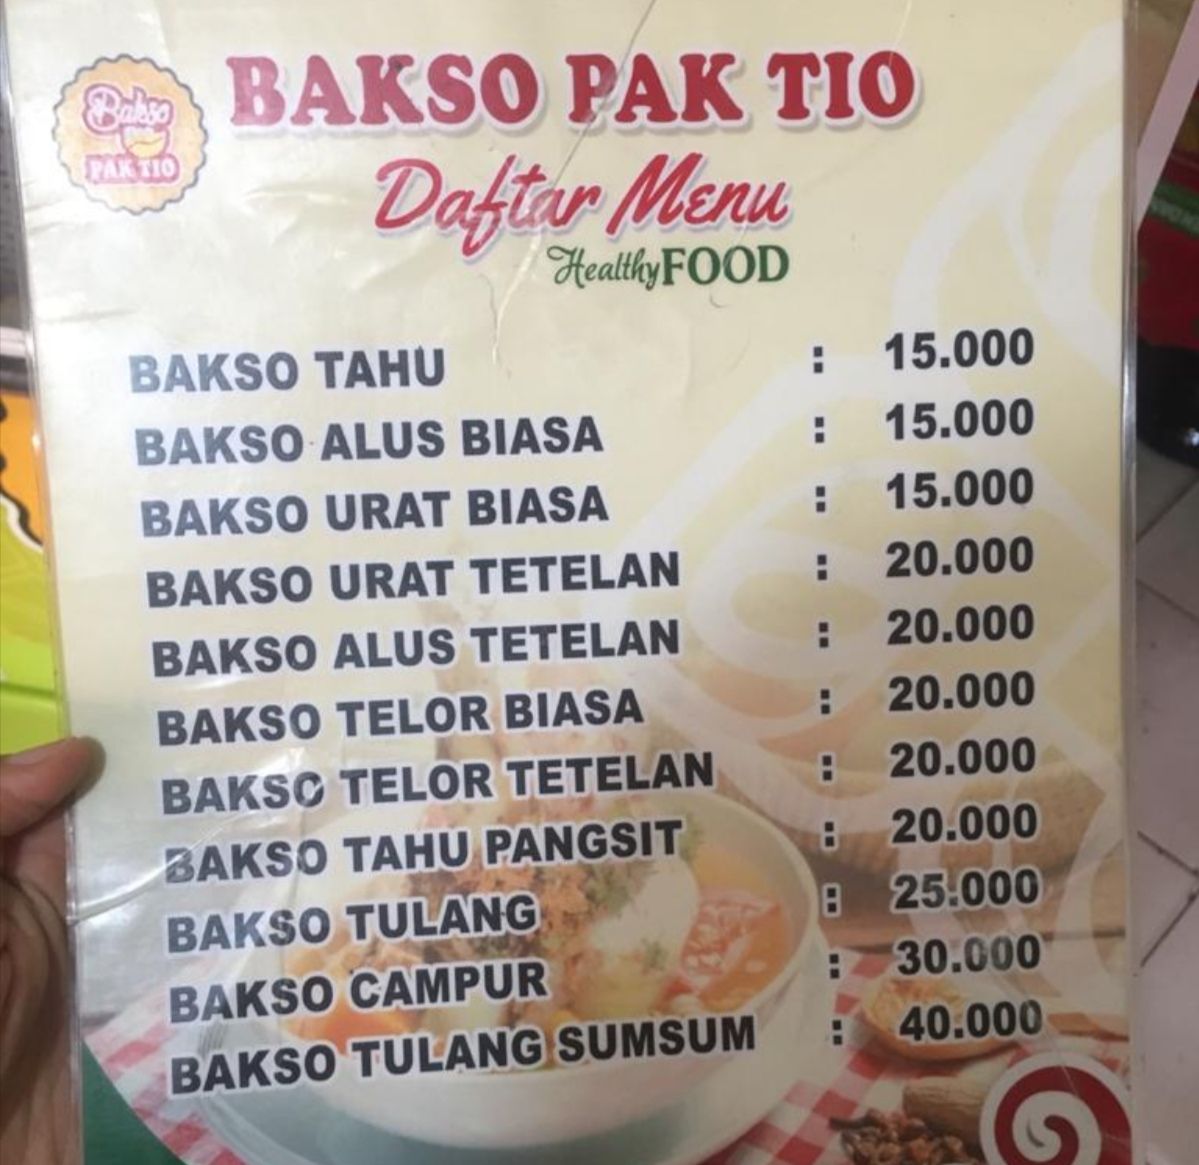 Daftar menu bakso Purwokerto, Bakso Tio Sokaraja 